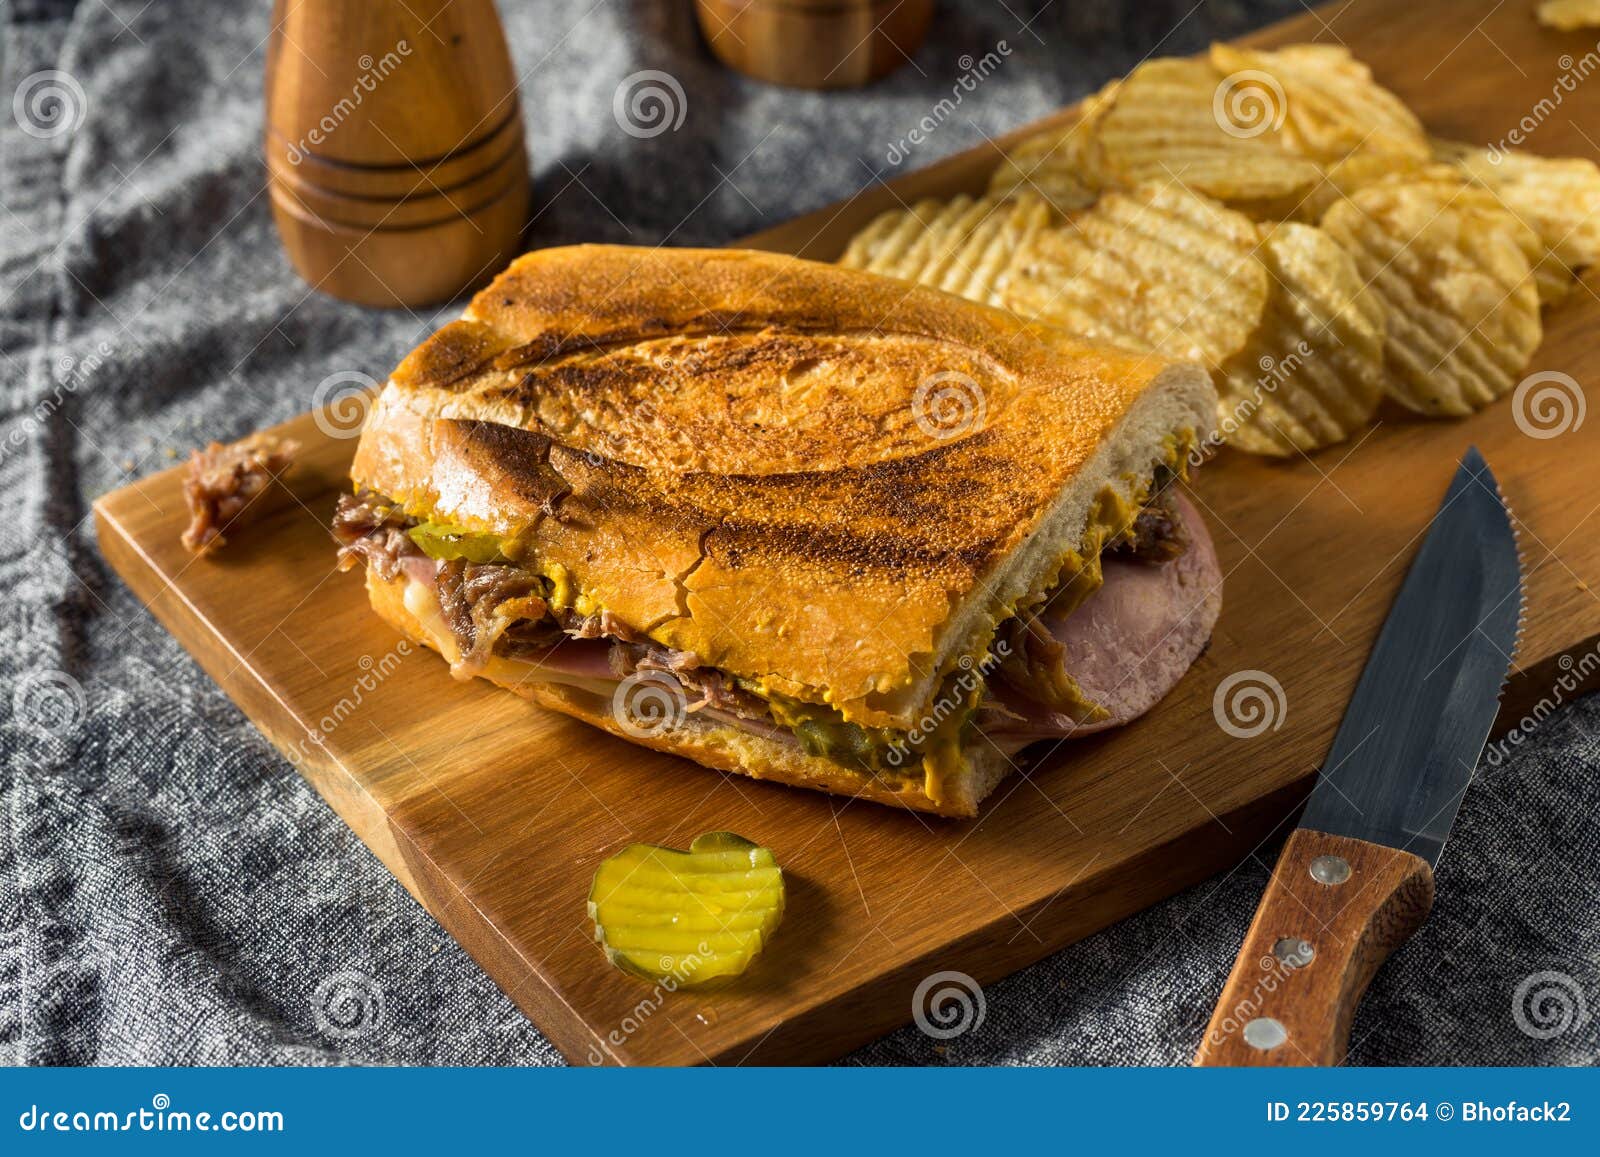 hearty homemade cubano pork sandwich